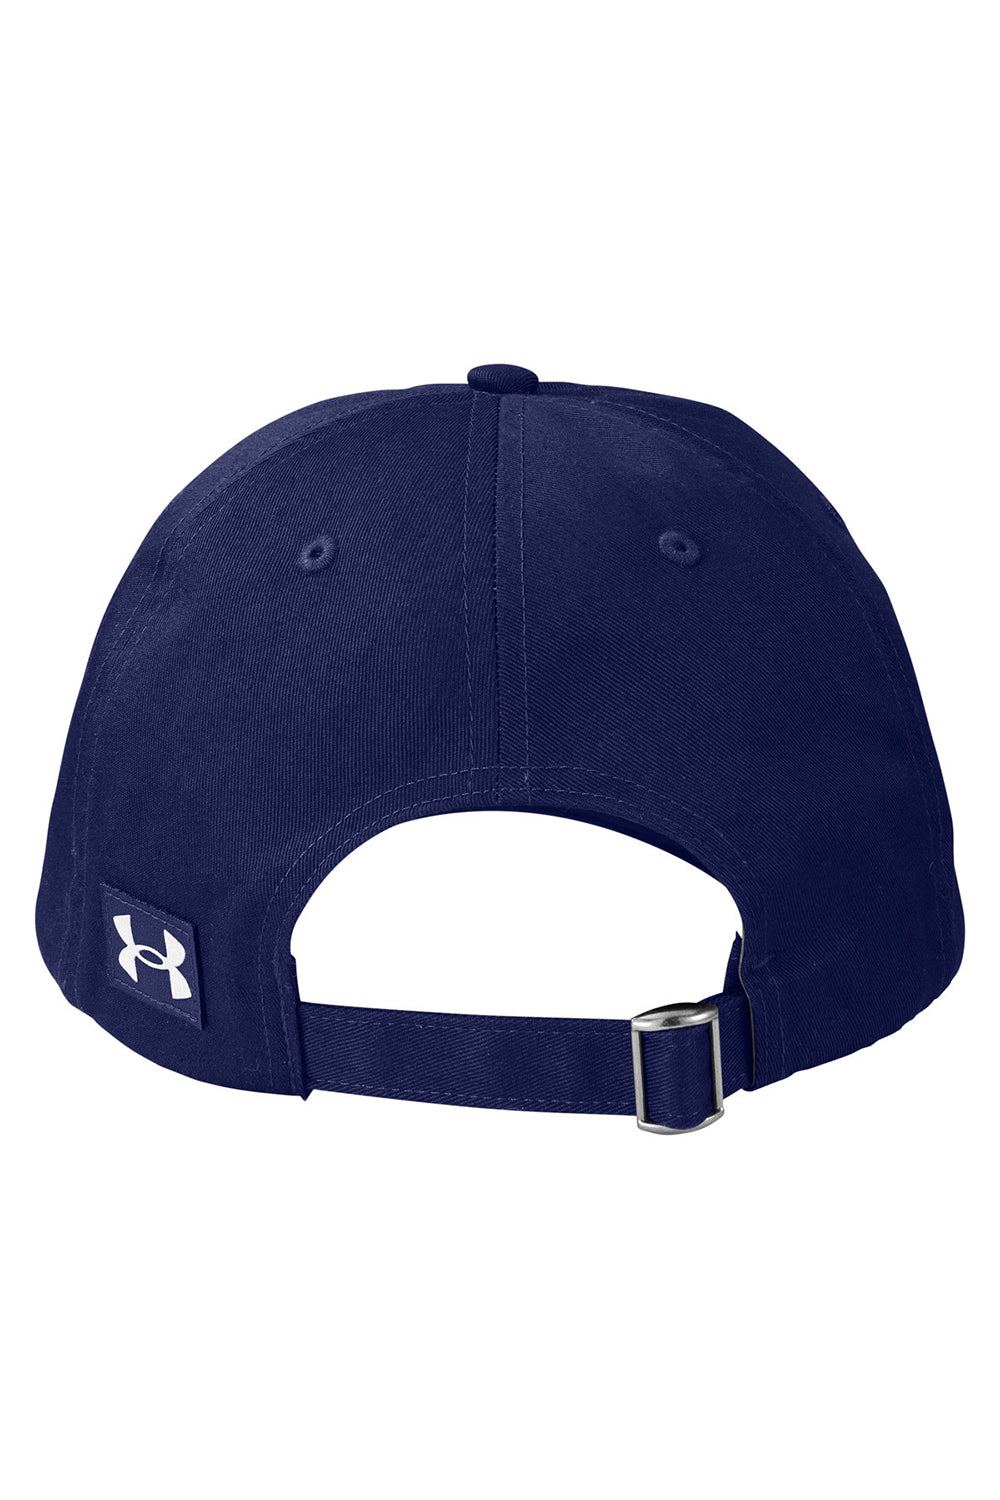 Under Armour 1369785  Moisture Wicking Team Chino Adjustable Hat Midnight Navy Blue Flat Back